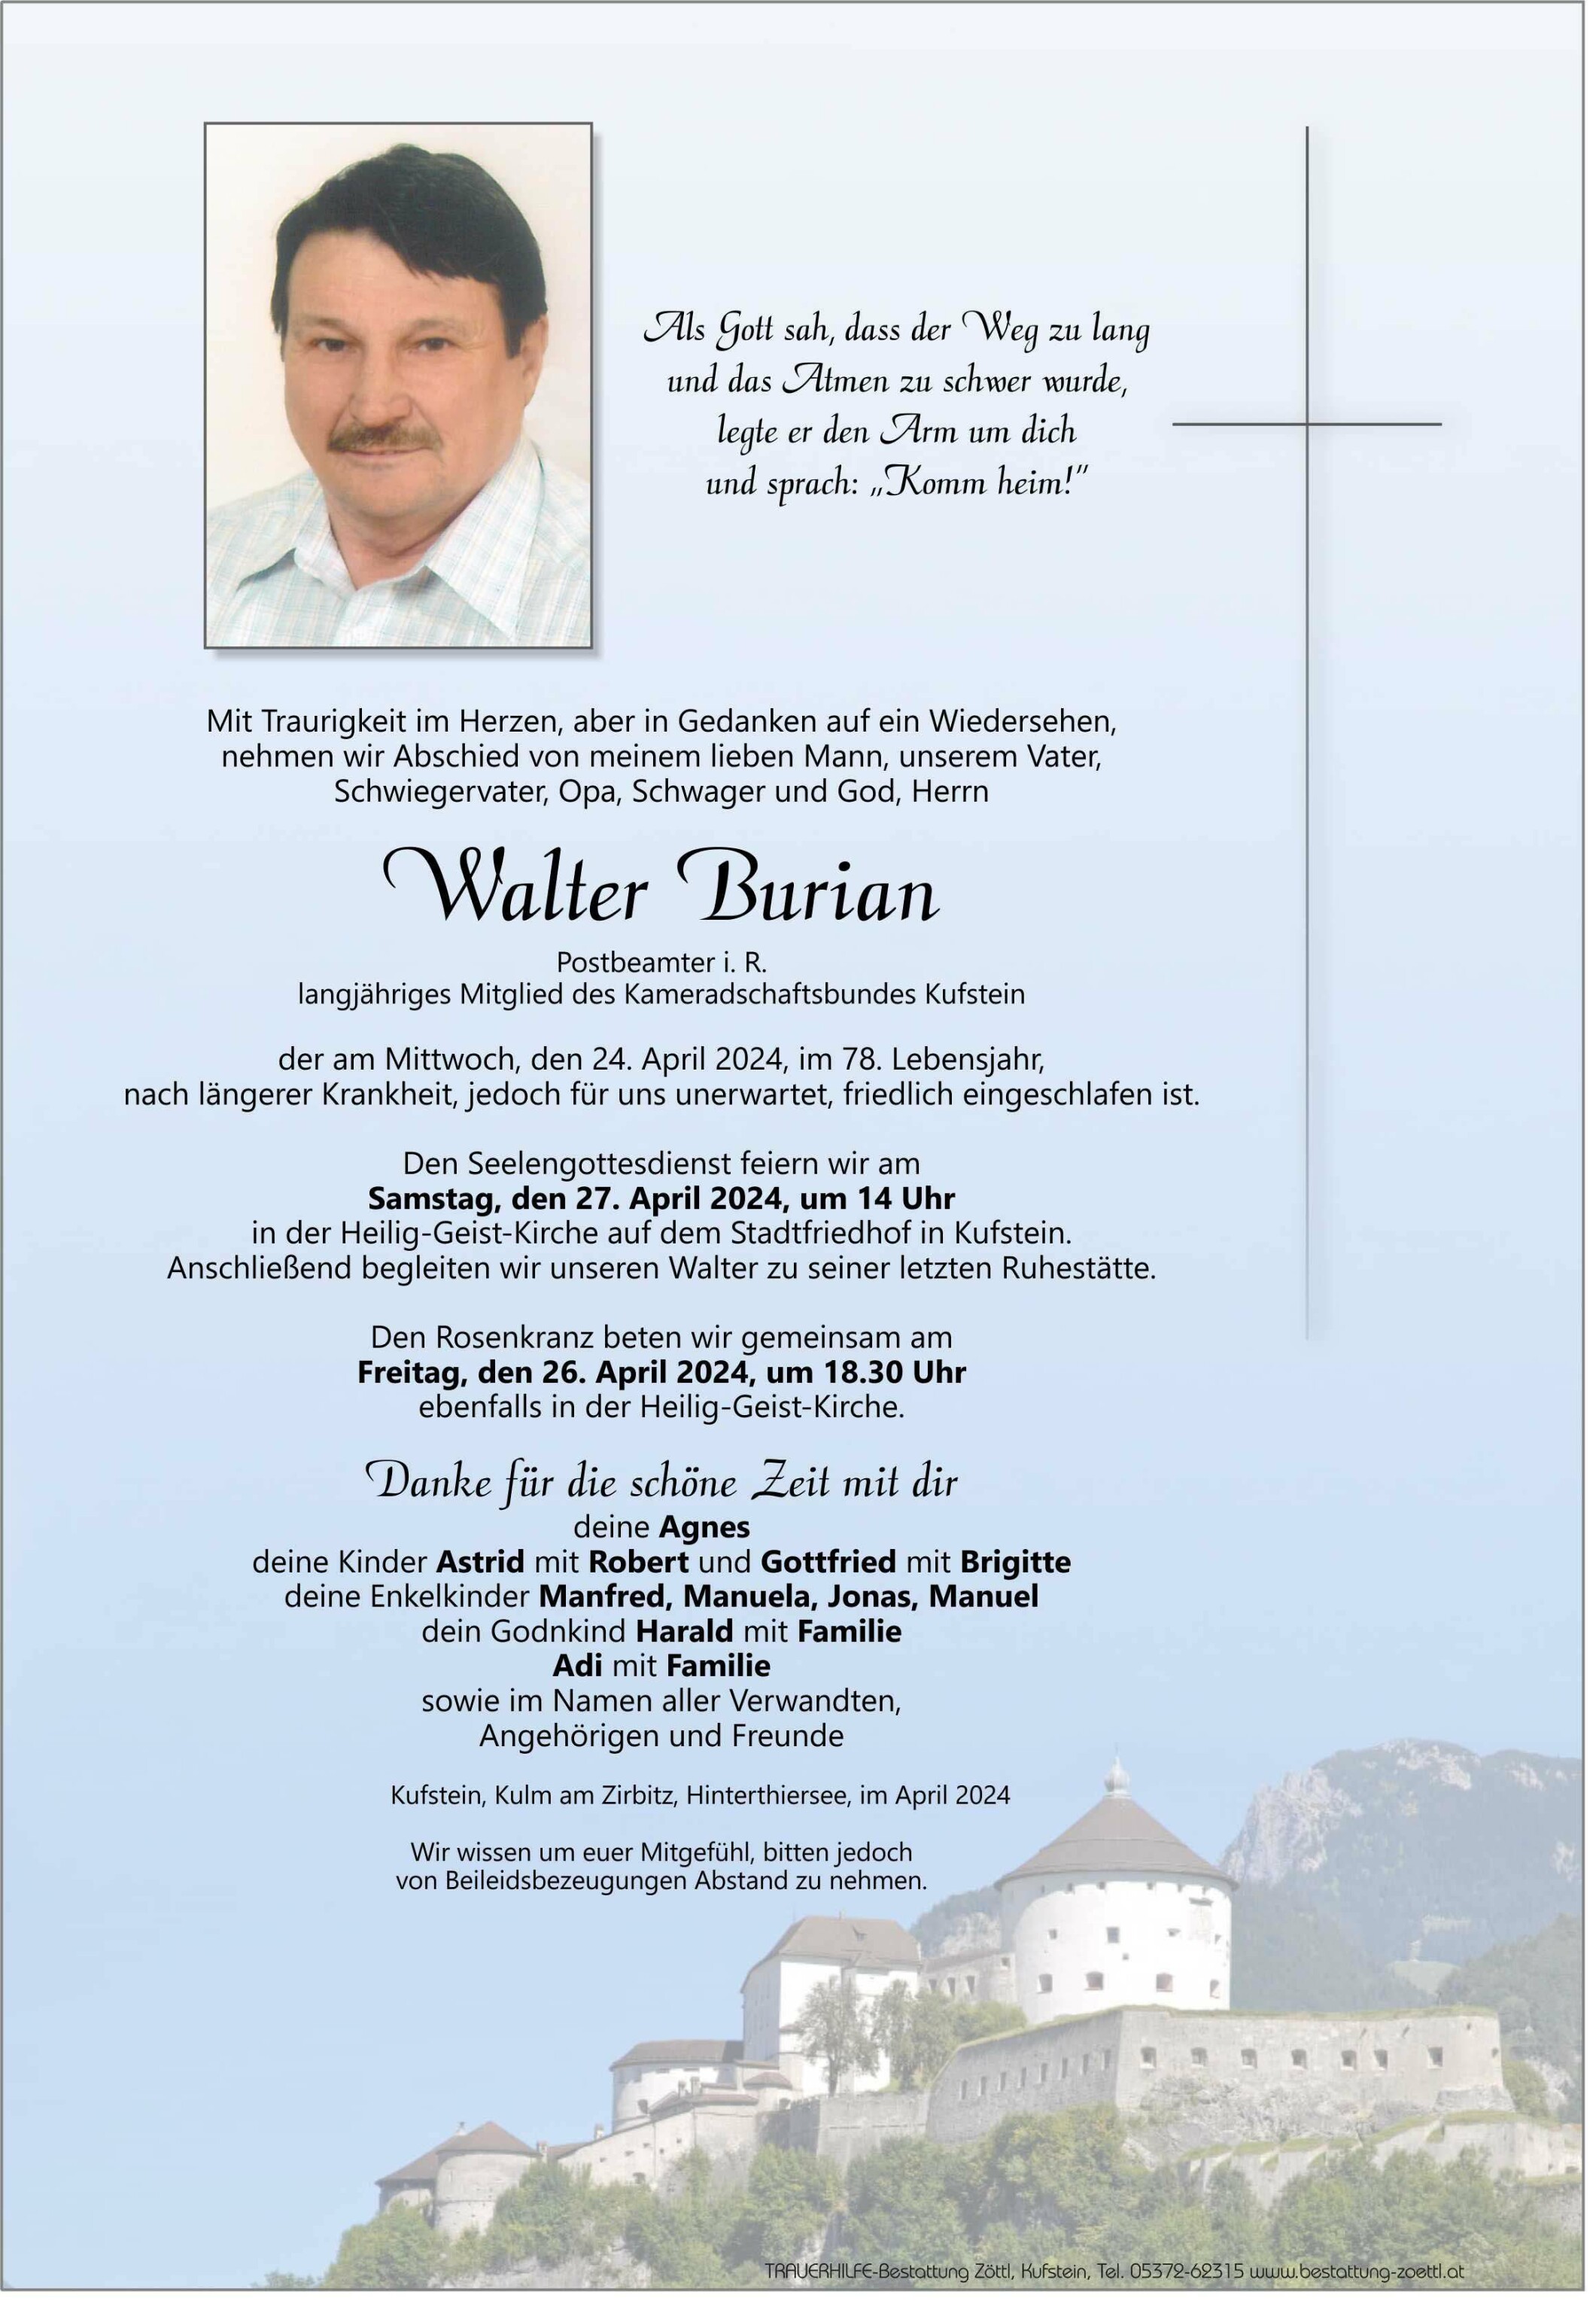 Walter Burian